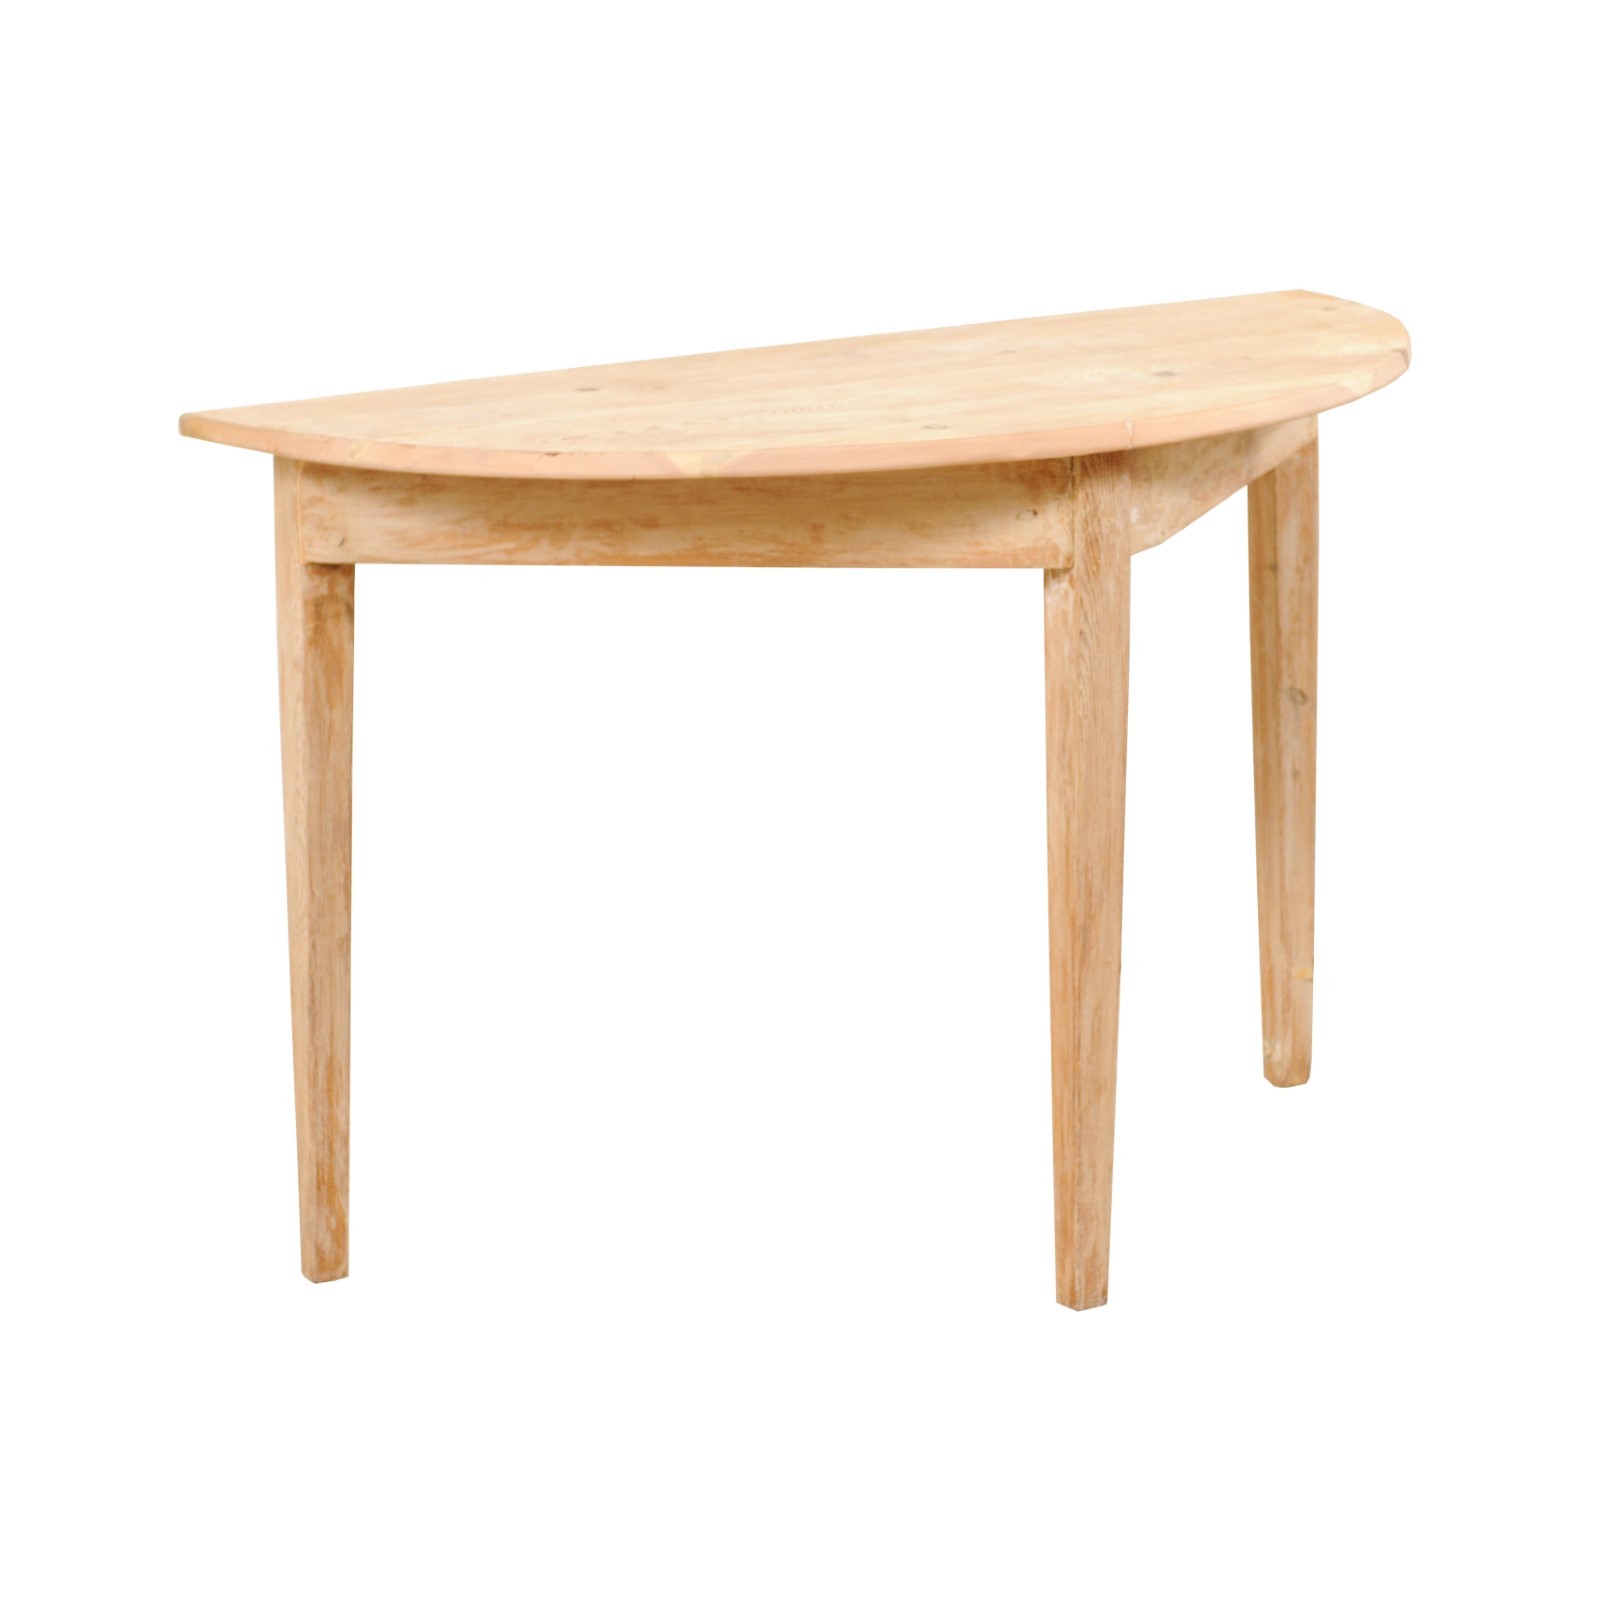 19th C. Swedish Demi-Lune Wooden Table